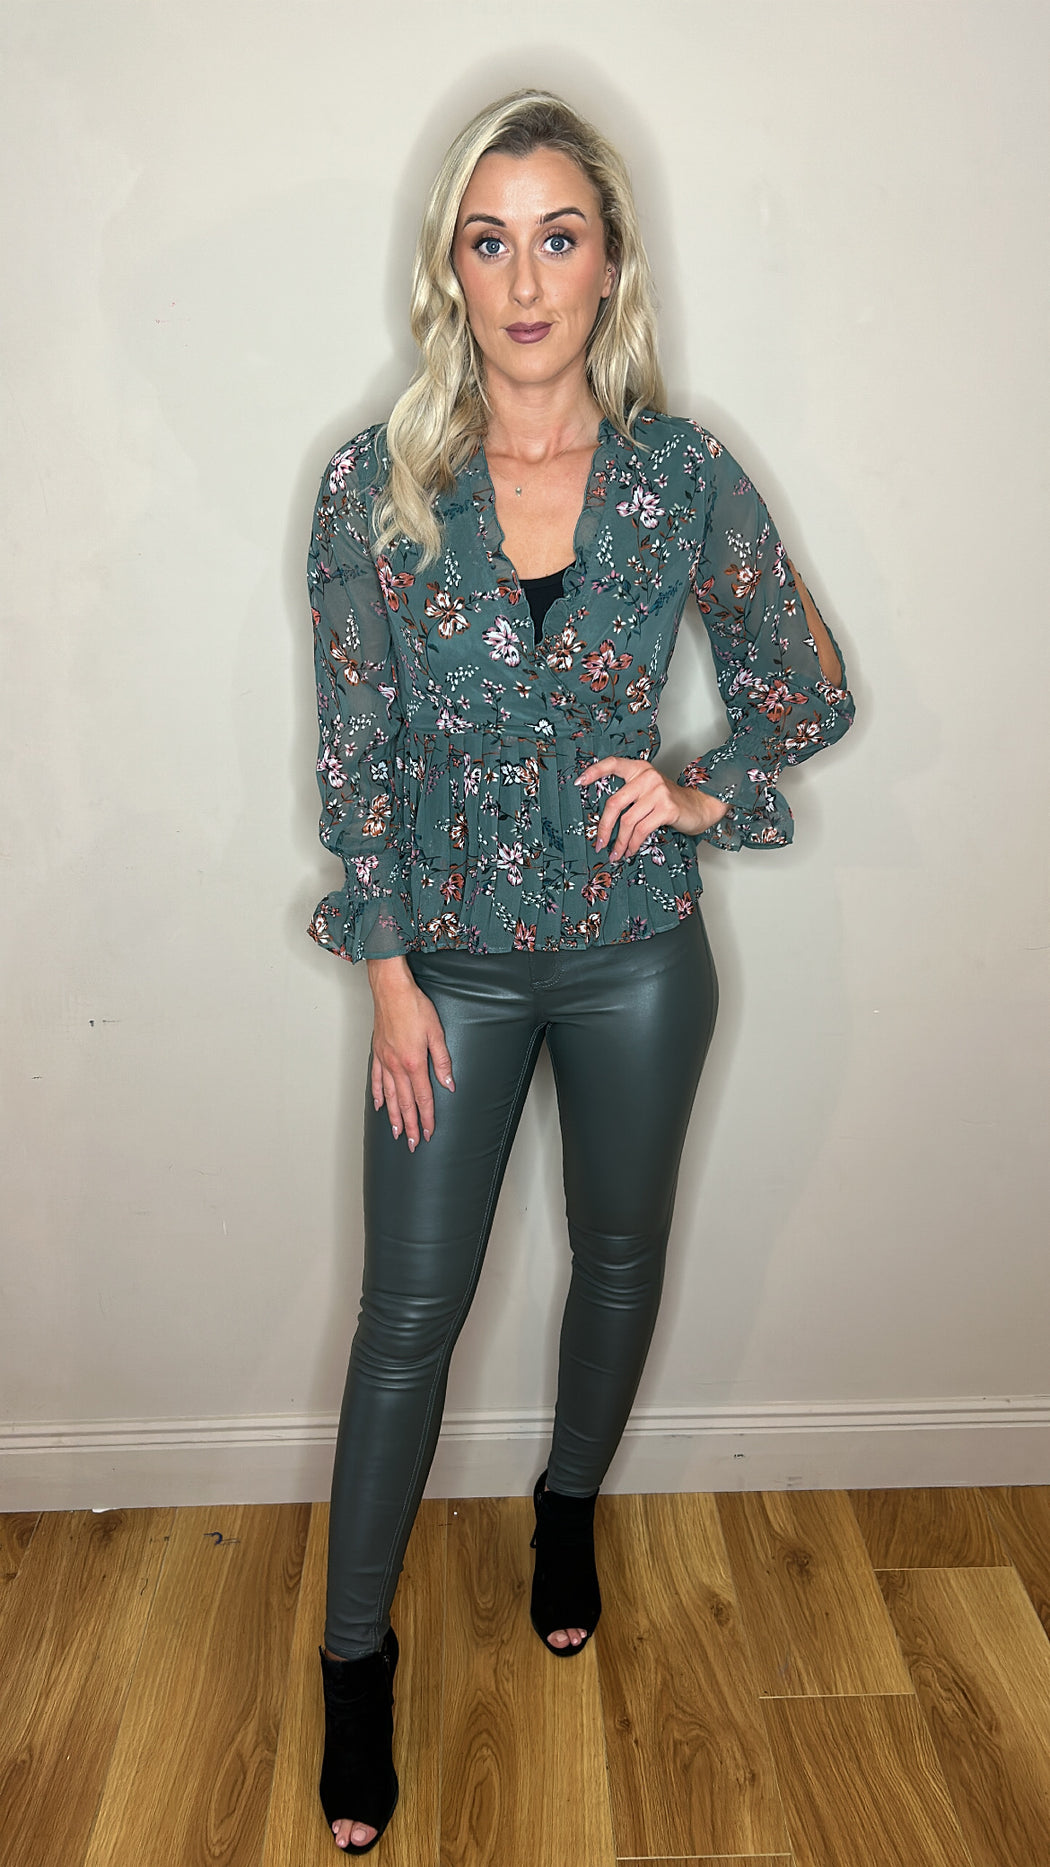 Lauren green leather look skinny jeans